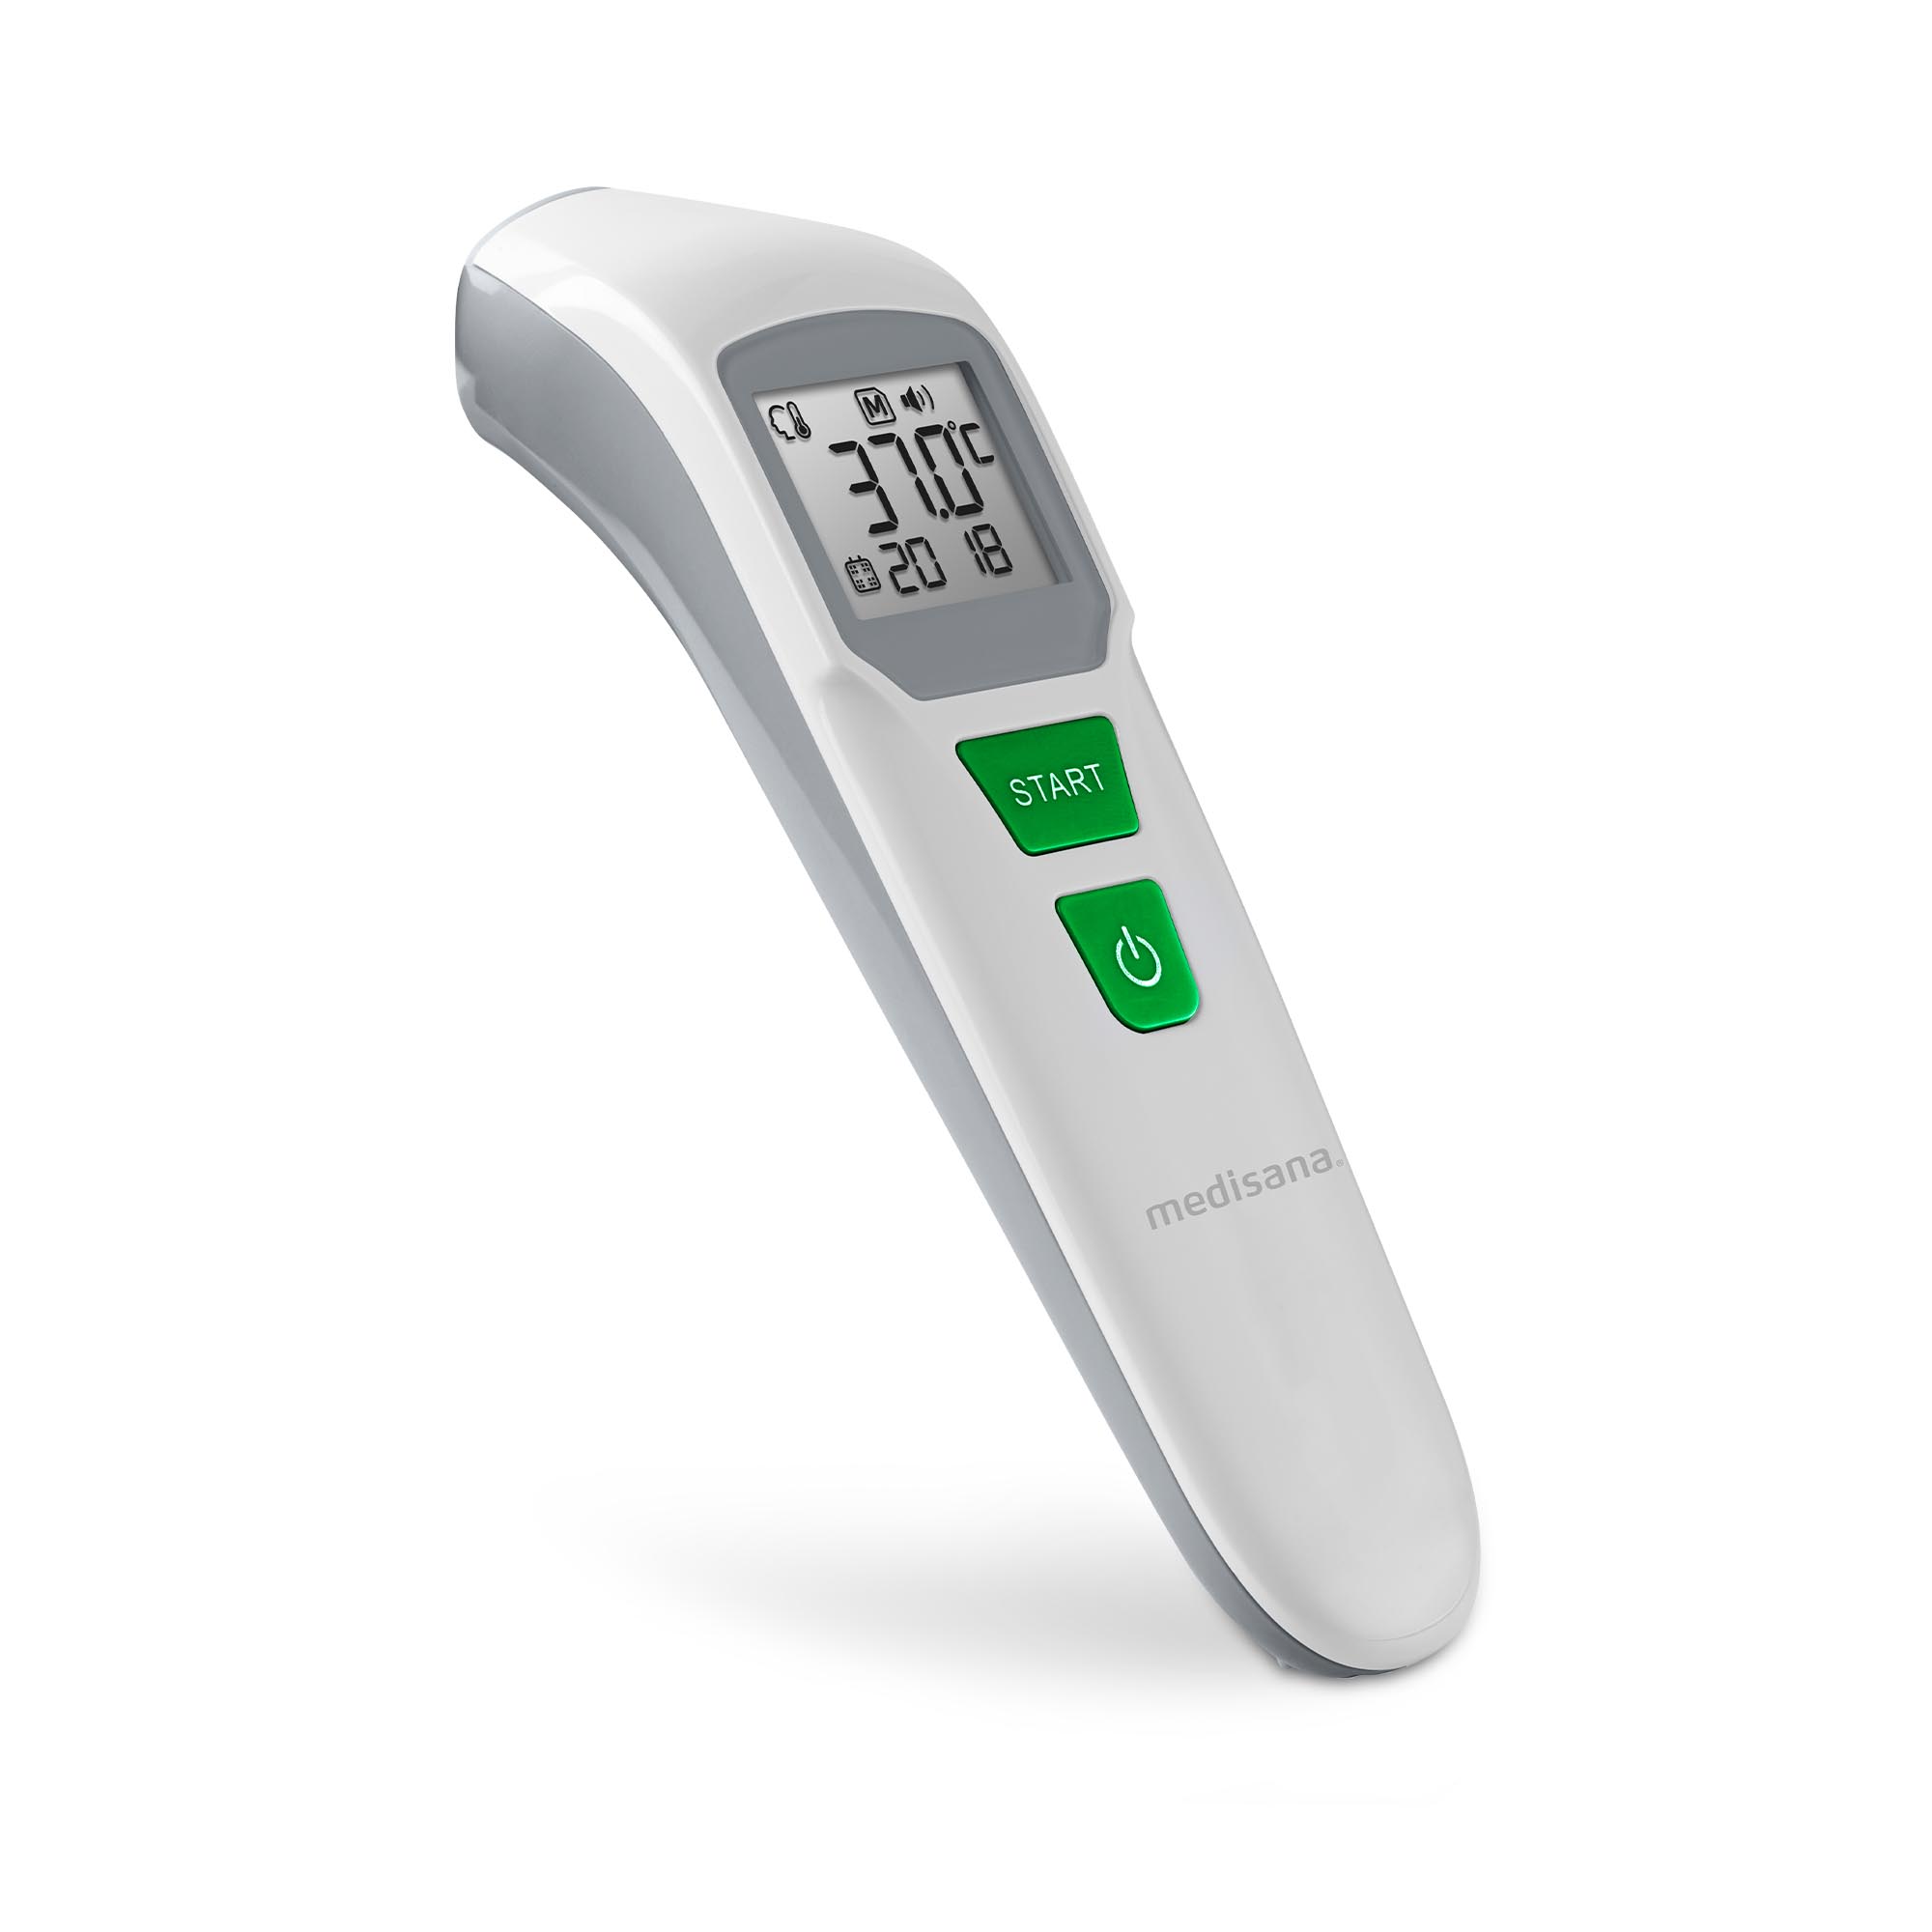 TM 762 Infrared Multi Functional Thermometer medisana®